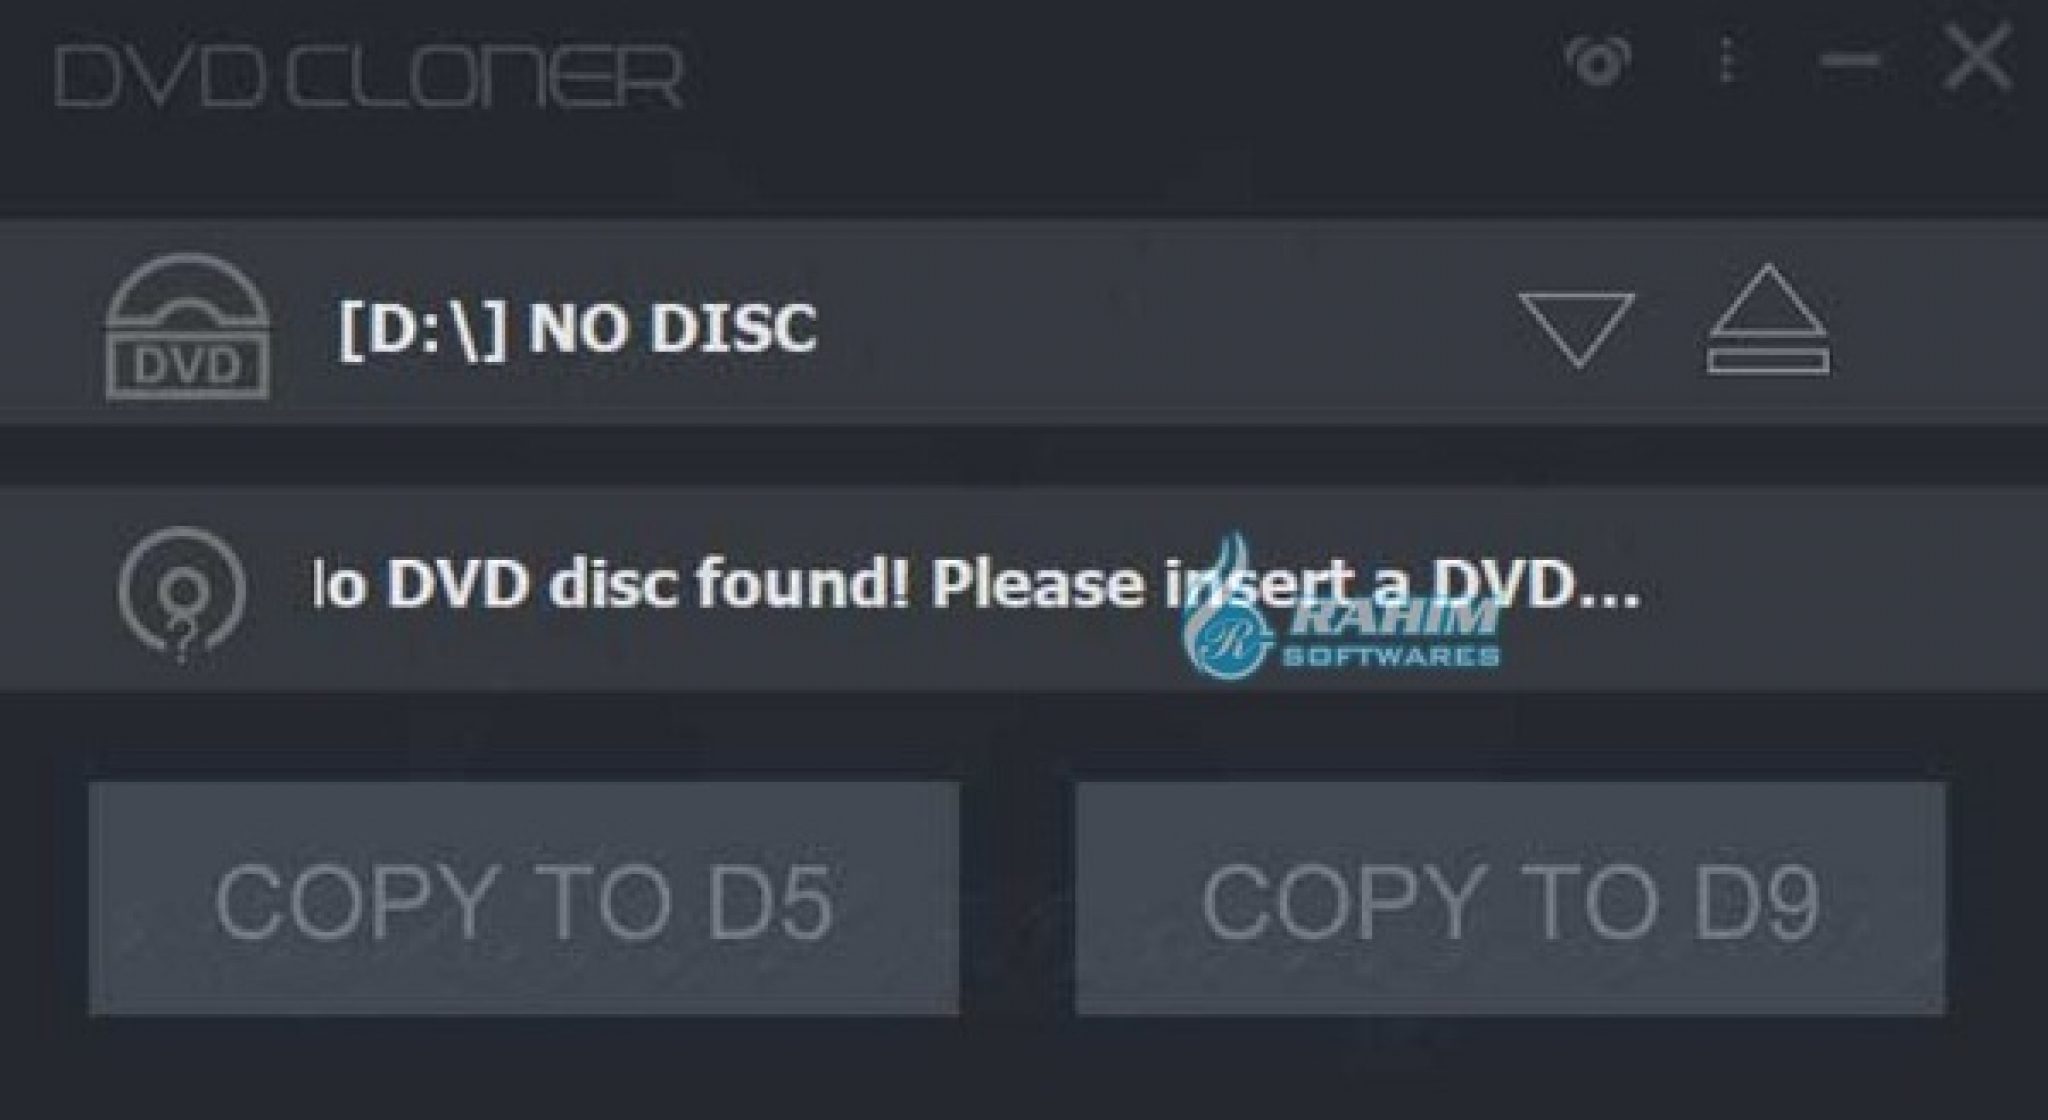 instal the new for android DVD-Cloner Platinum 2023 v20.20.0.1480